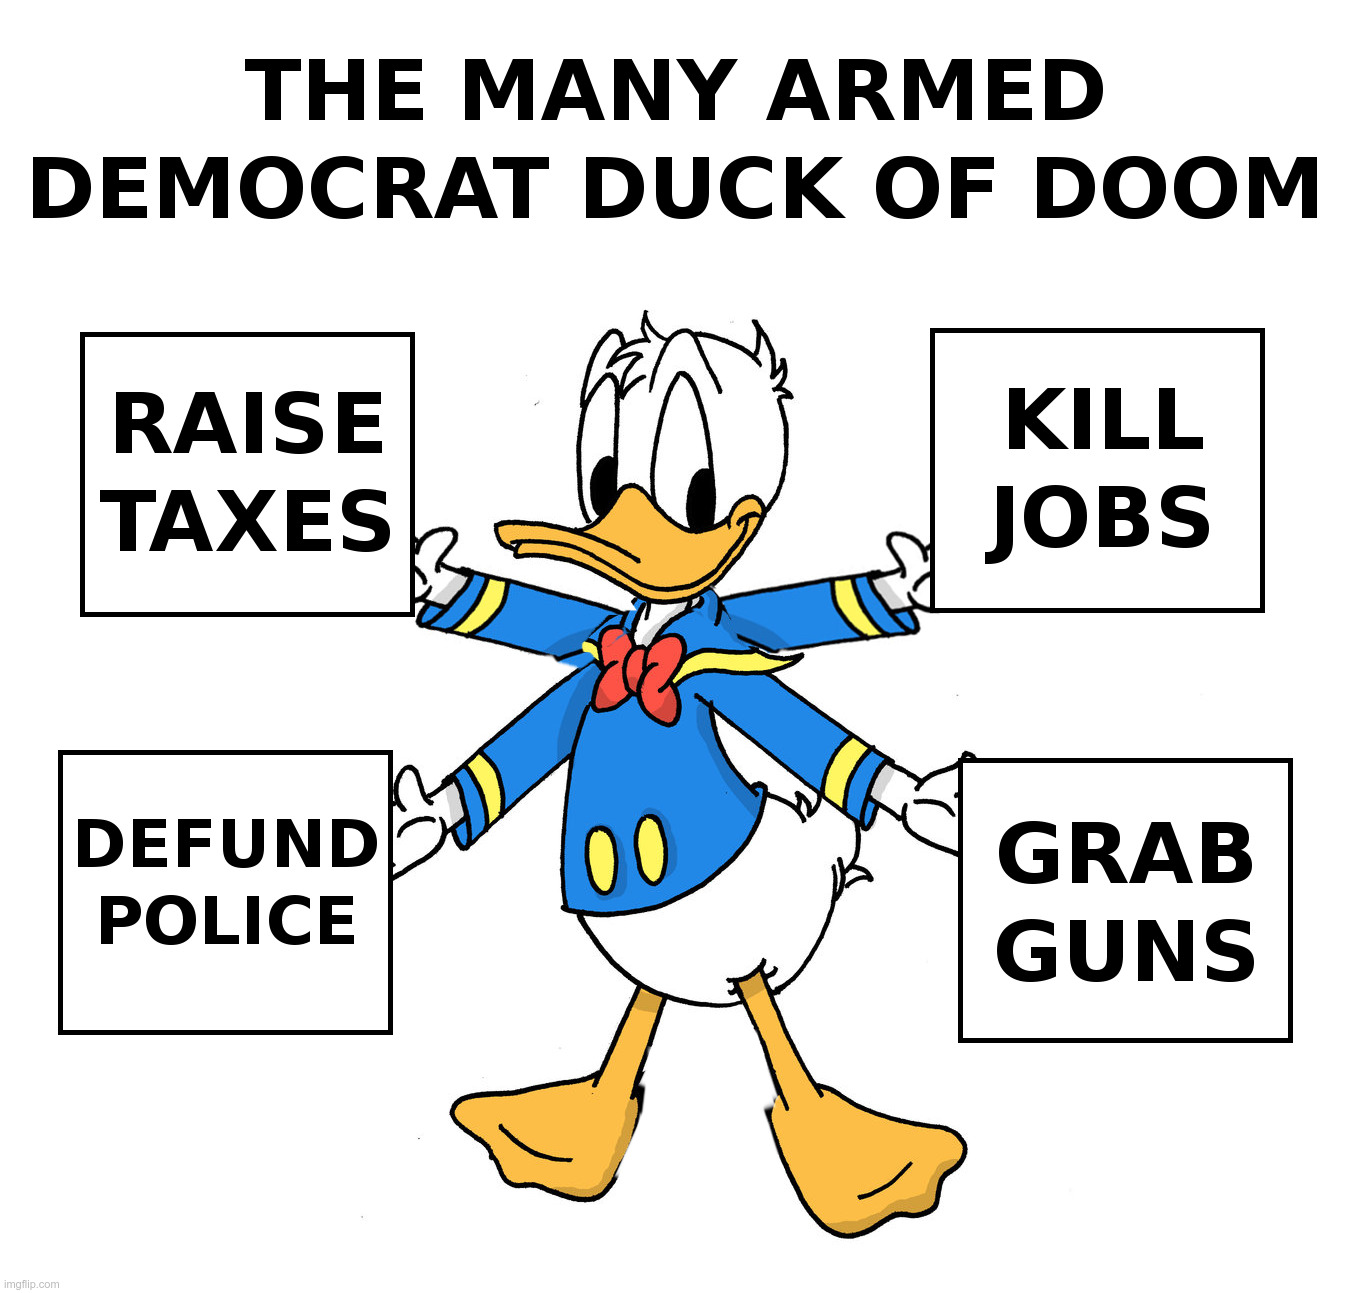 The Many Armed Democrat Duck of Doom | image tagged in donald duck,joe biden,democrats,keystone pipeline,defund police,gun control | made w/ Imgflip meme maker